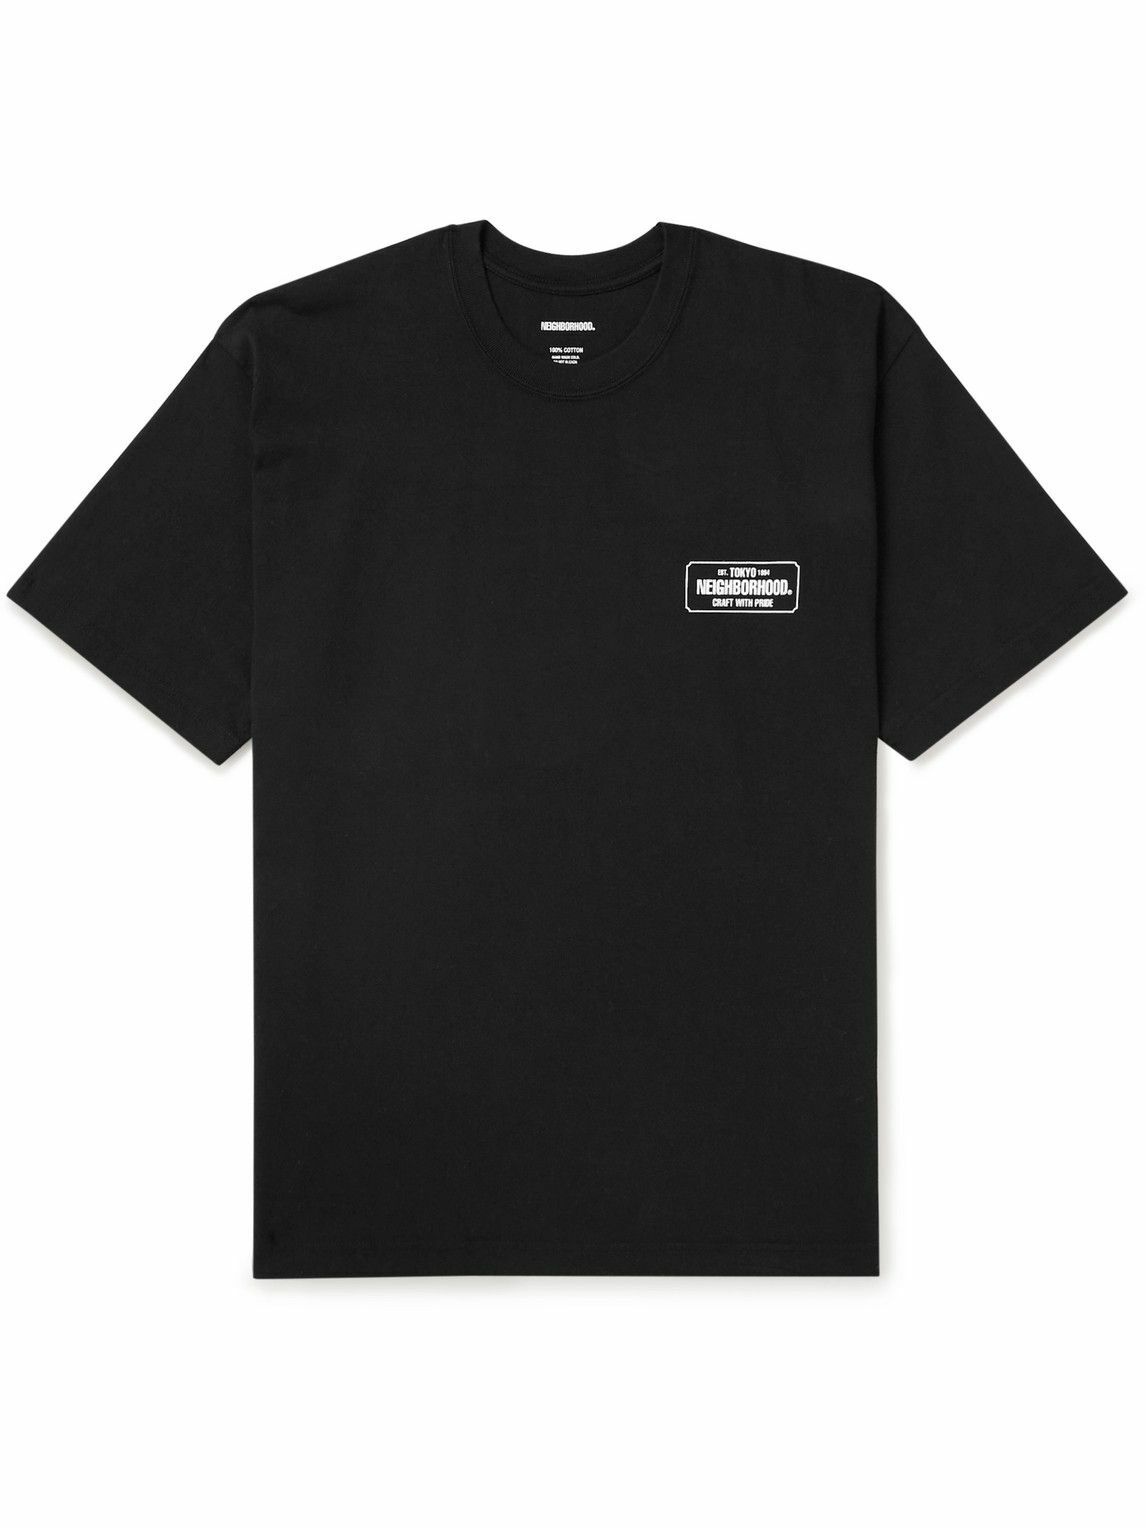 Neighborhood - Logo-Print Cotton-Jersey T-Shirt - Black Neighborhood